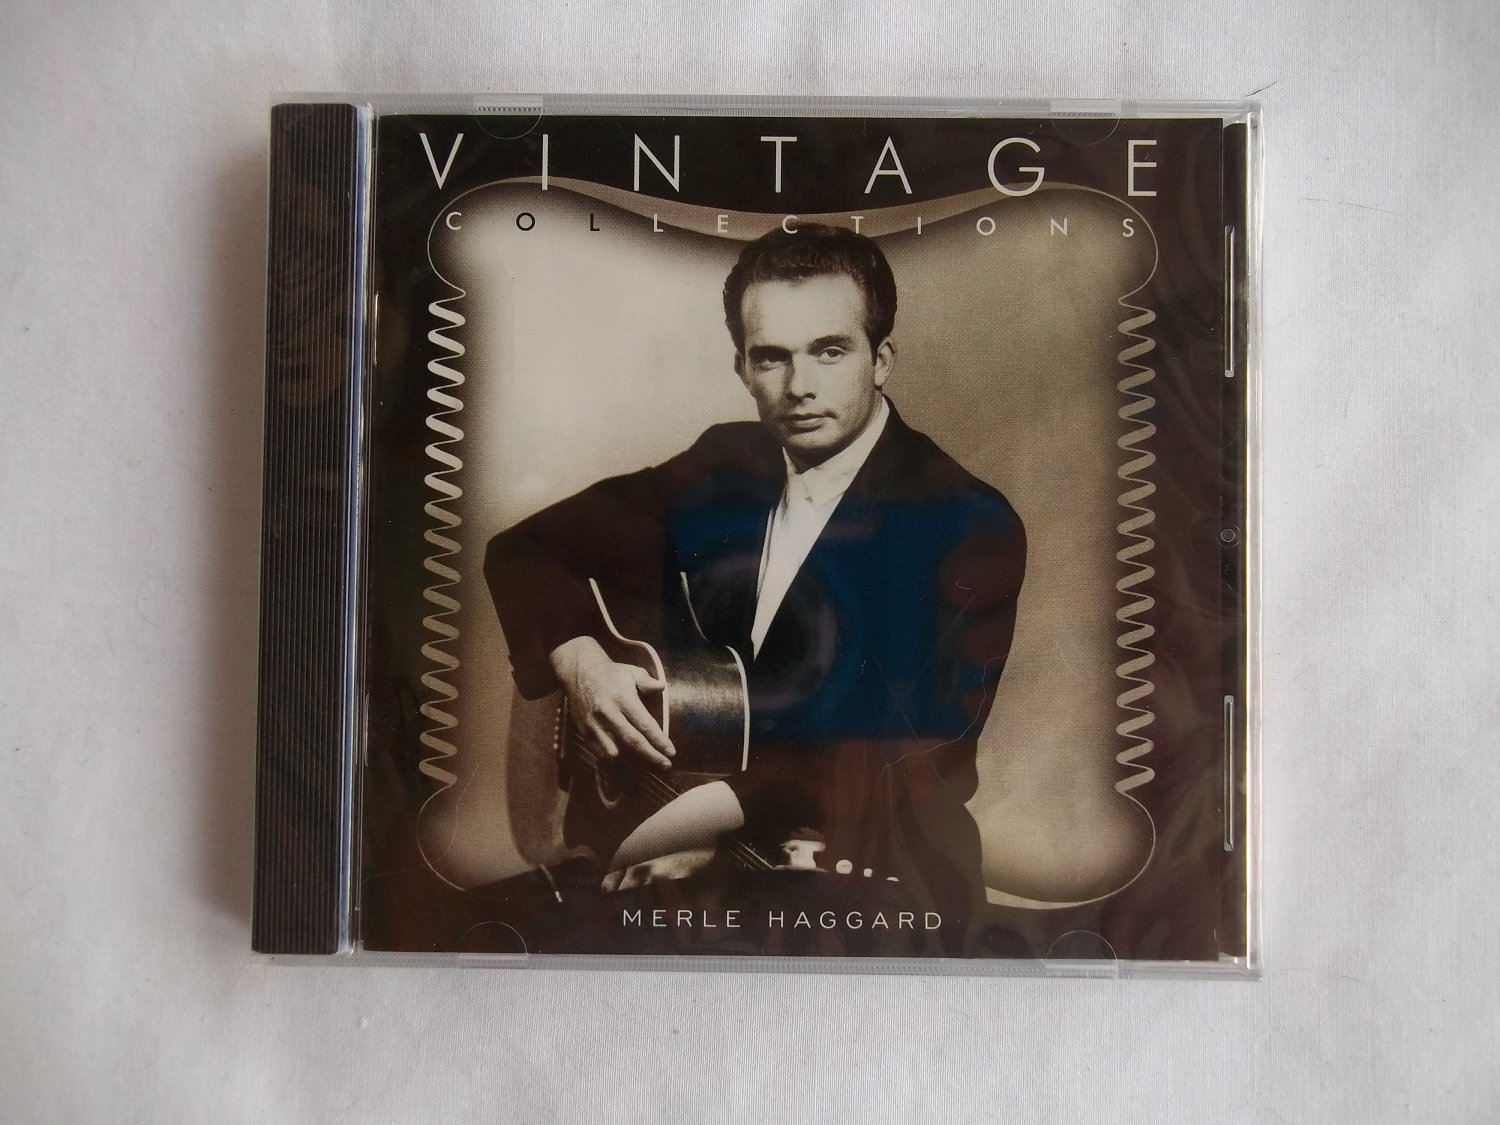 VINTAGE COLLECTIONS, Merle Haggard CD